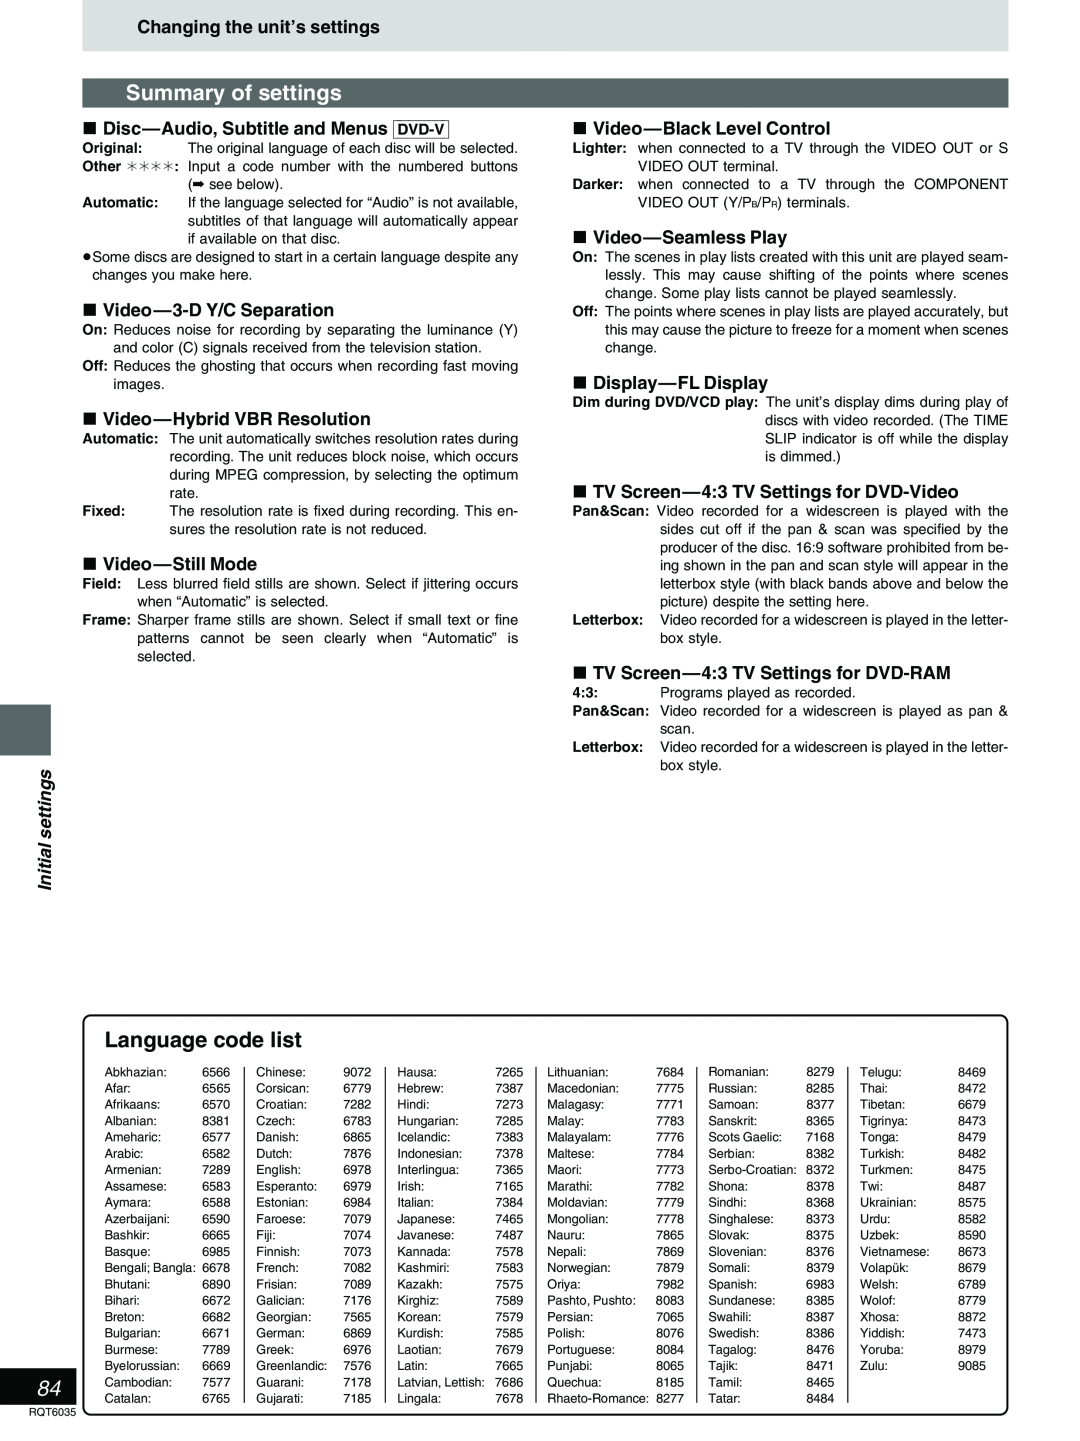 Panasonic DMR-E20 Summary of settings, Language code list, Changing the unit’s settings, º Video-3-D Y/C Separation 